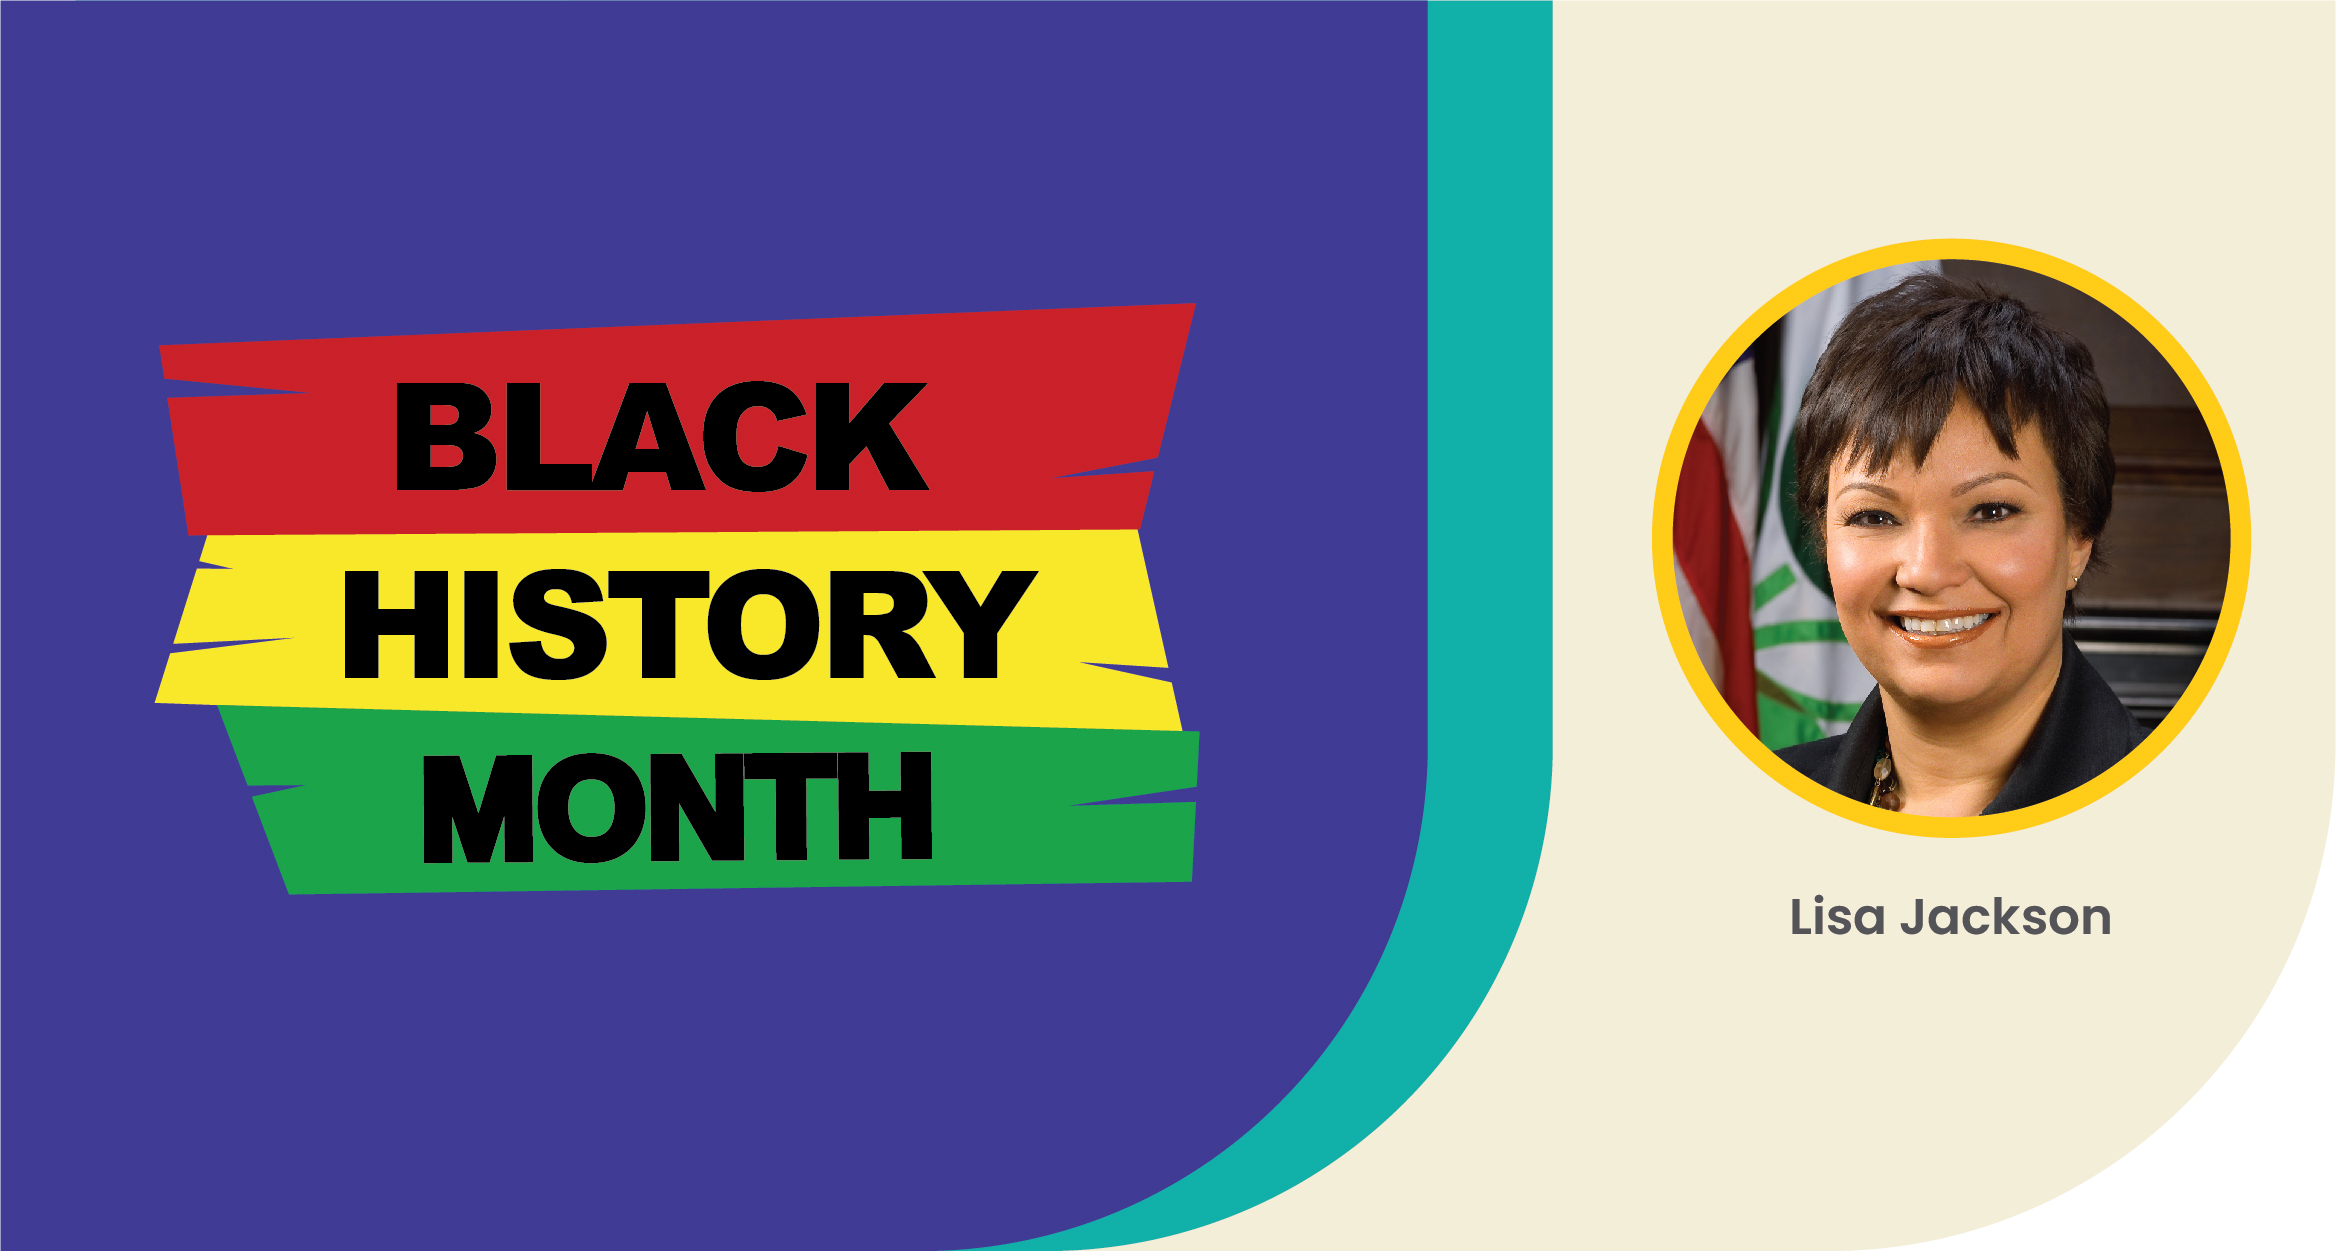 Black History Month: Lisa Jackson